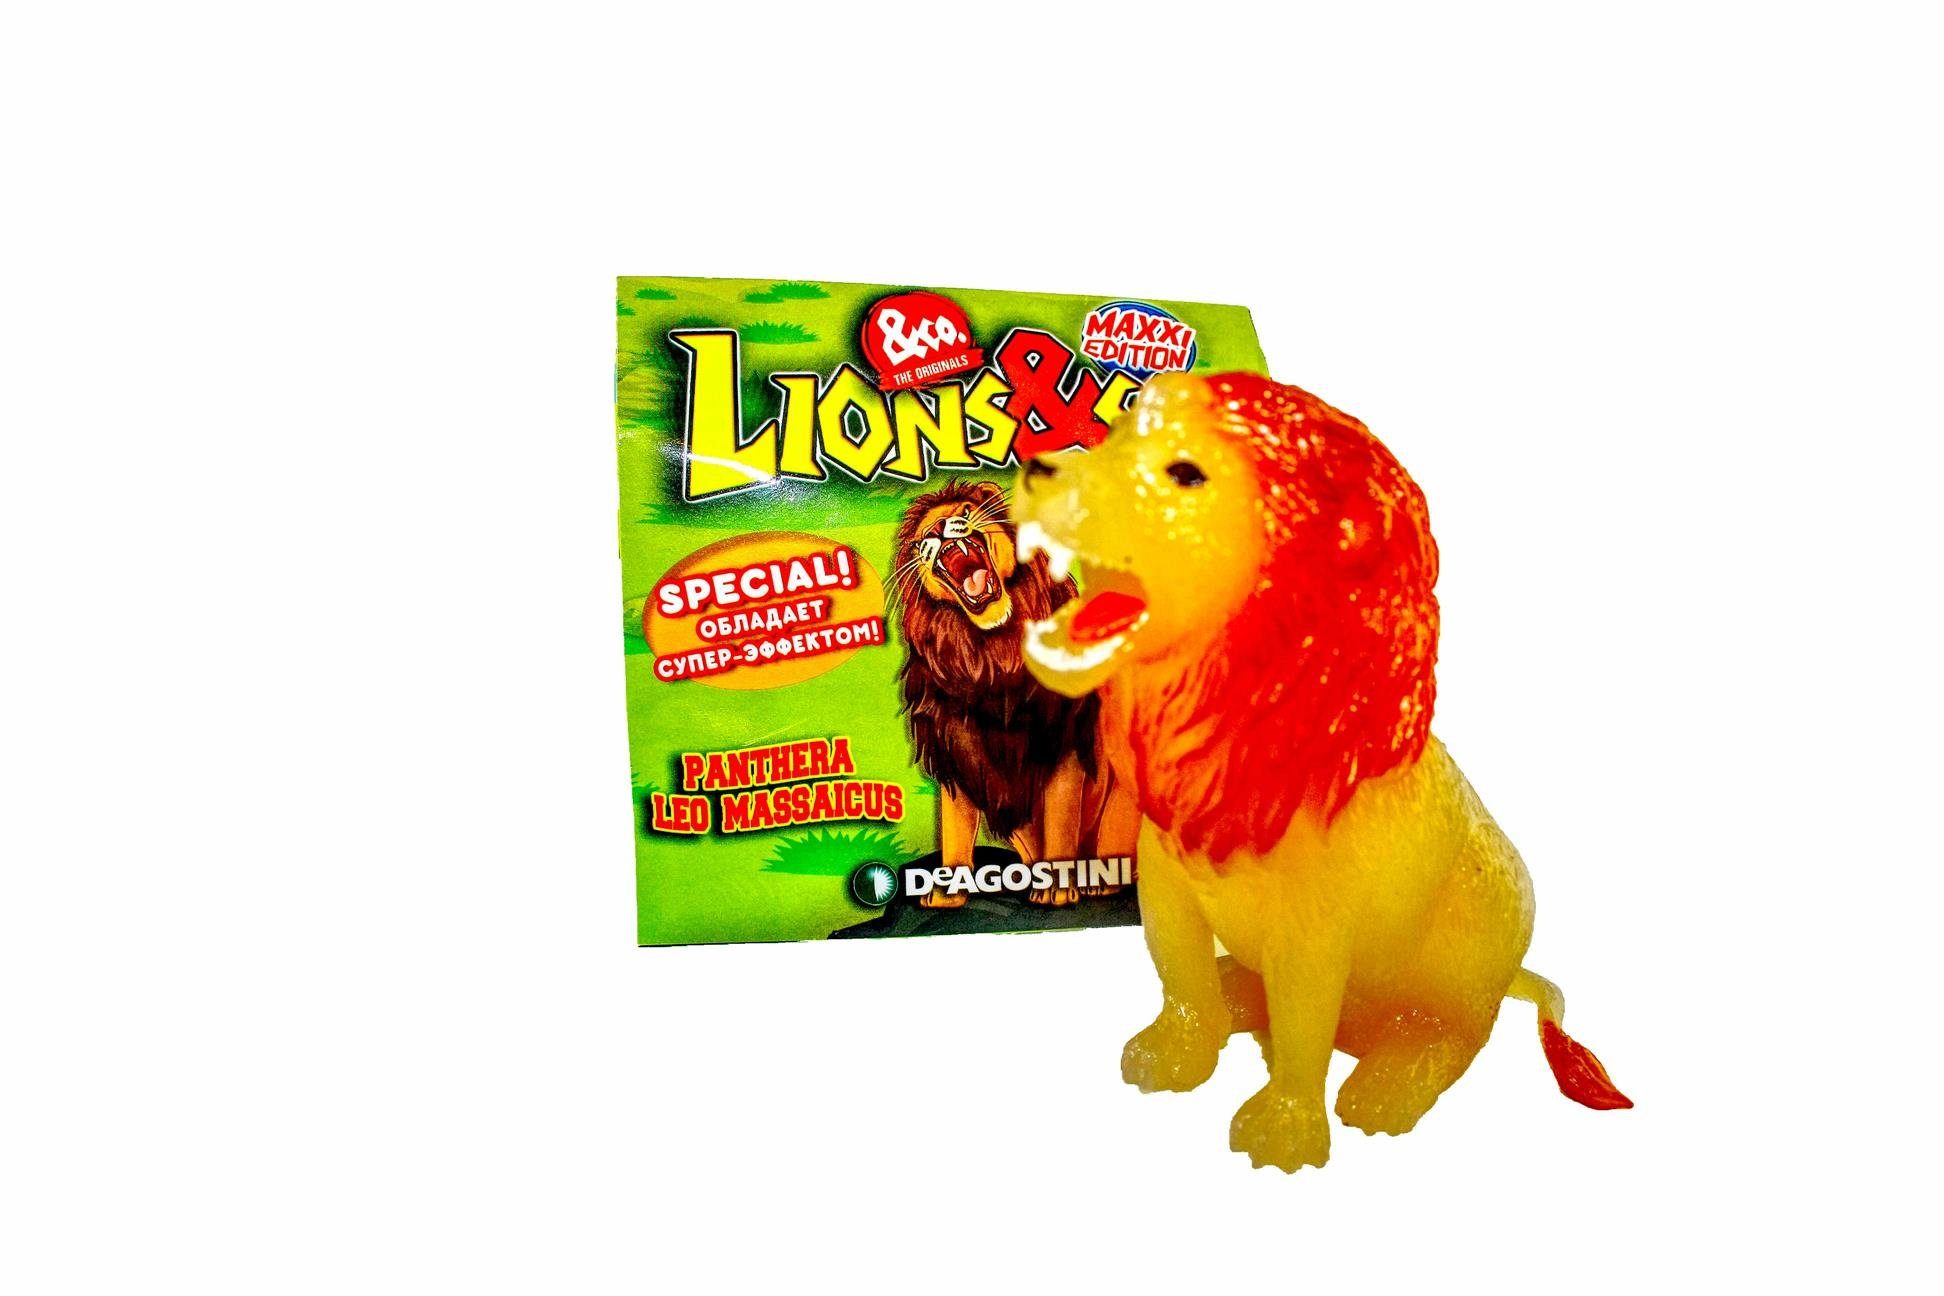 DeAgostini Sammelfigur Lions & Co. Maxxi Edition - Wähle aus Allen 16 Figuren (Panthera Leo (Set)